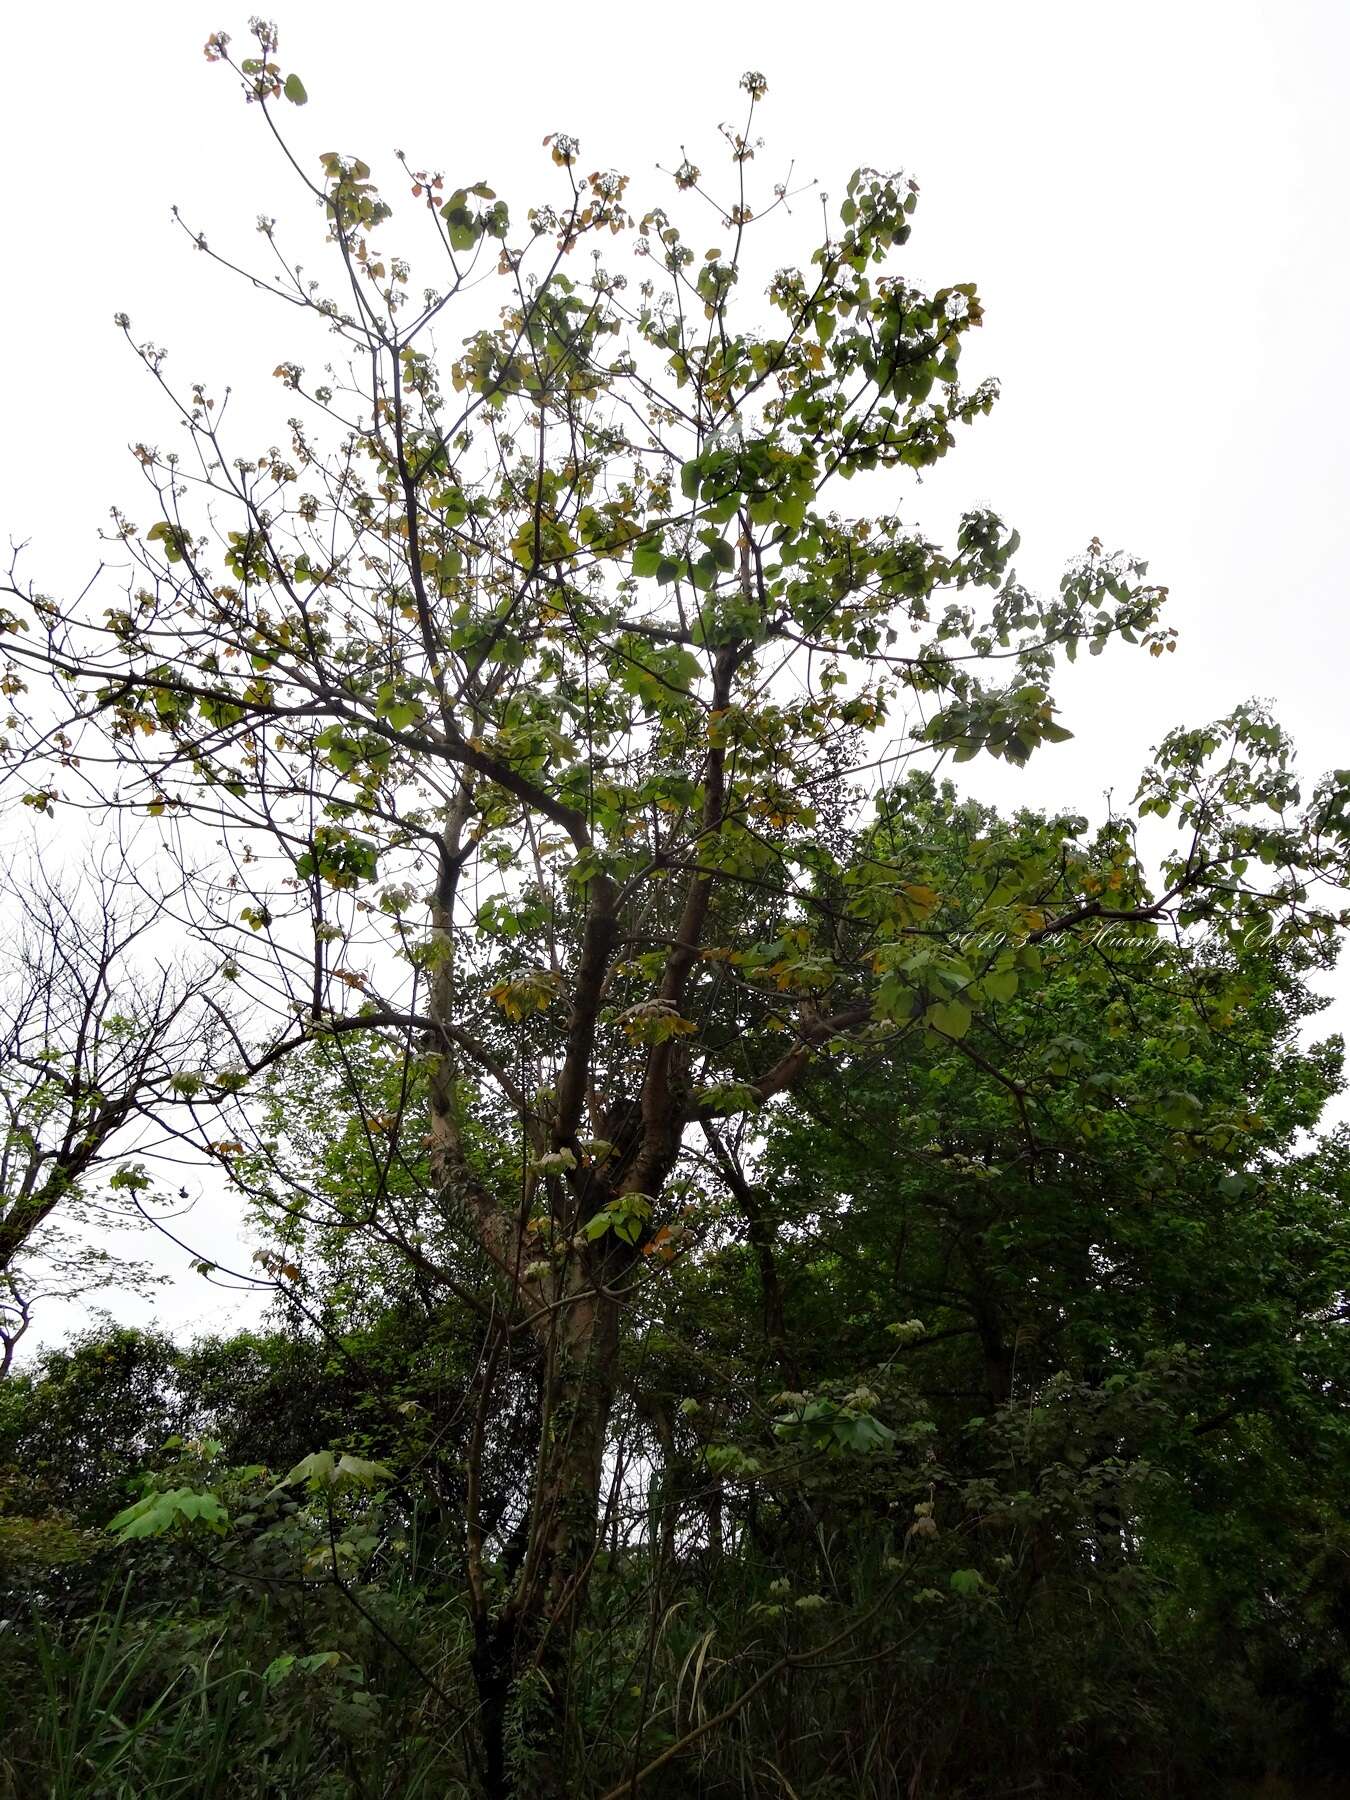 Image of mu oil tree